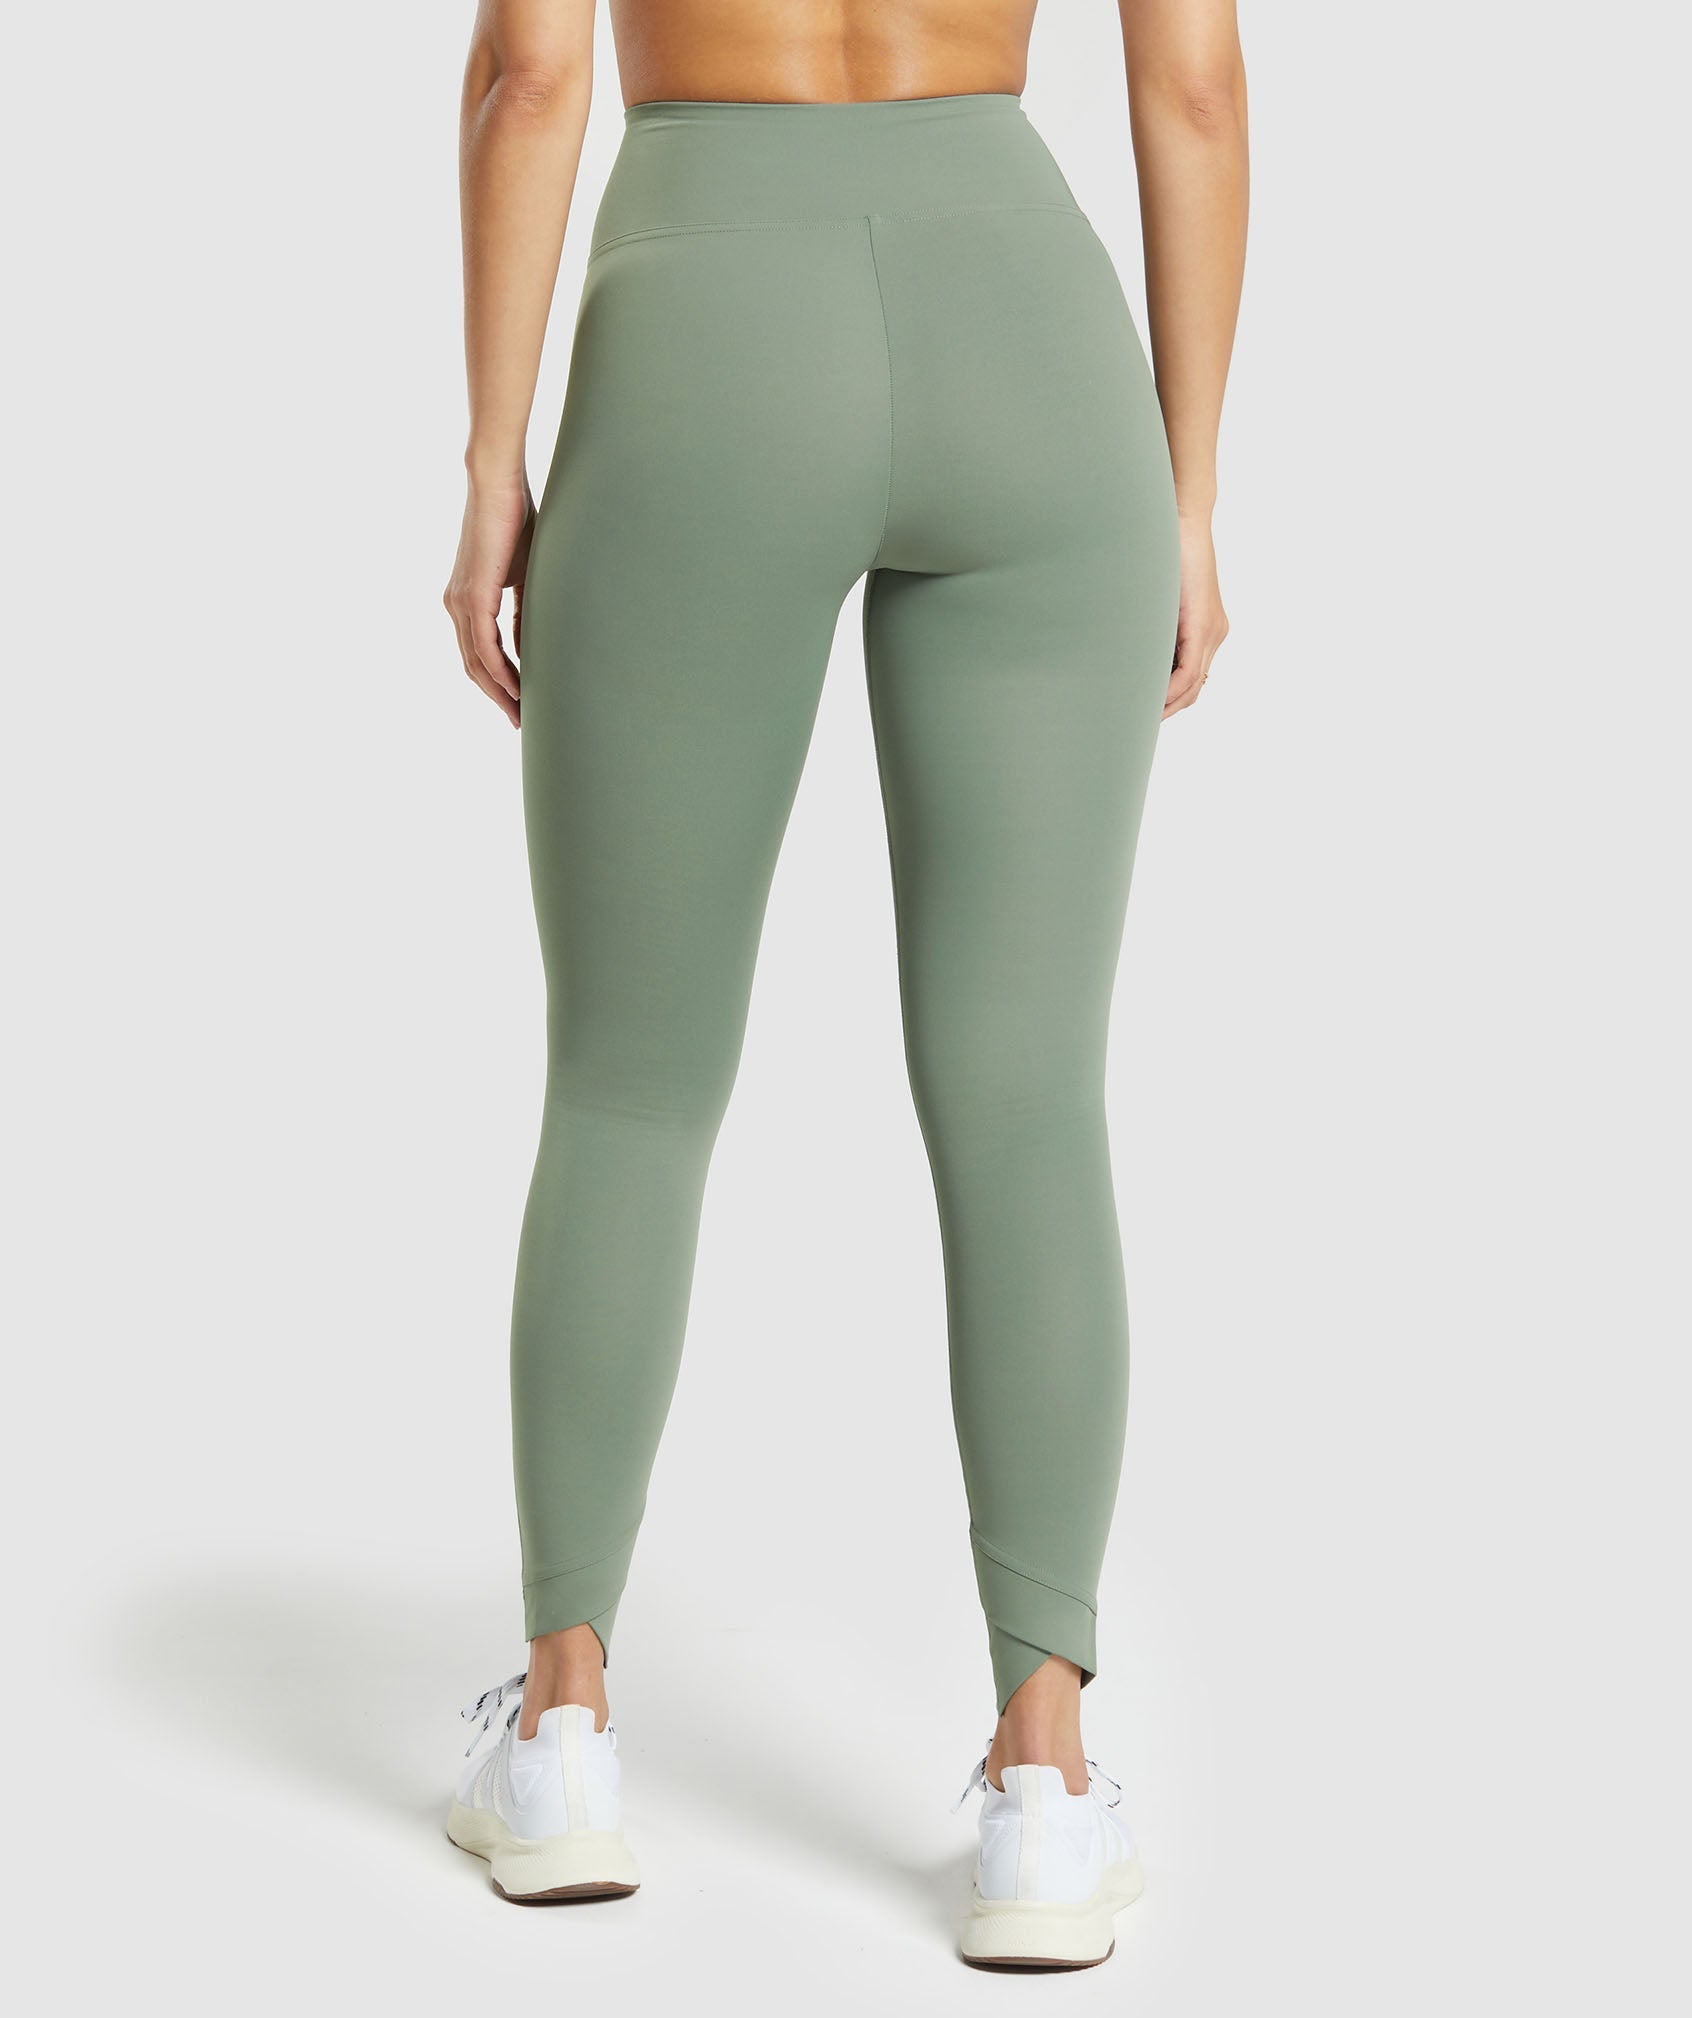 Shamrock Womens Leggings (grey & green) – Shamrock Gymwear